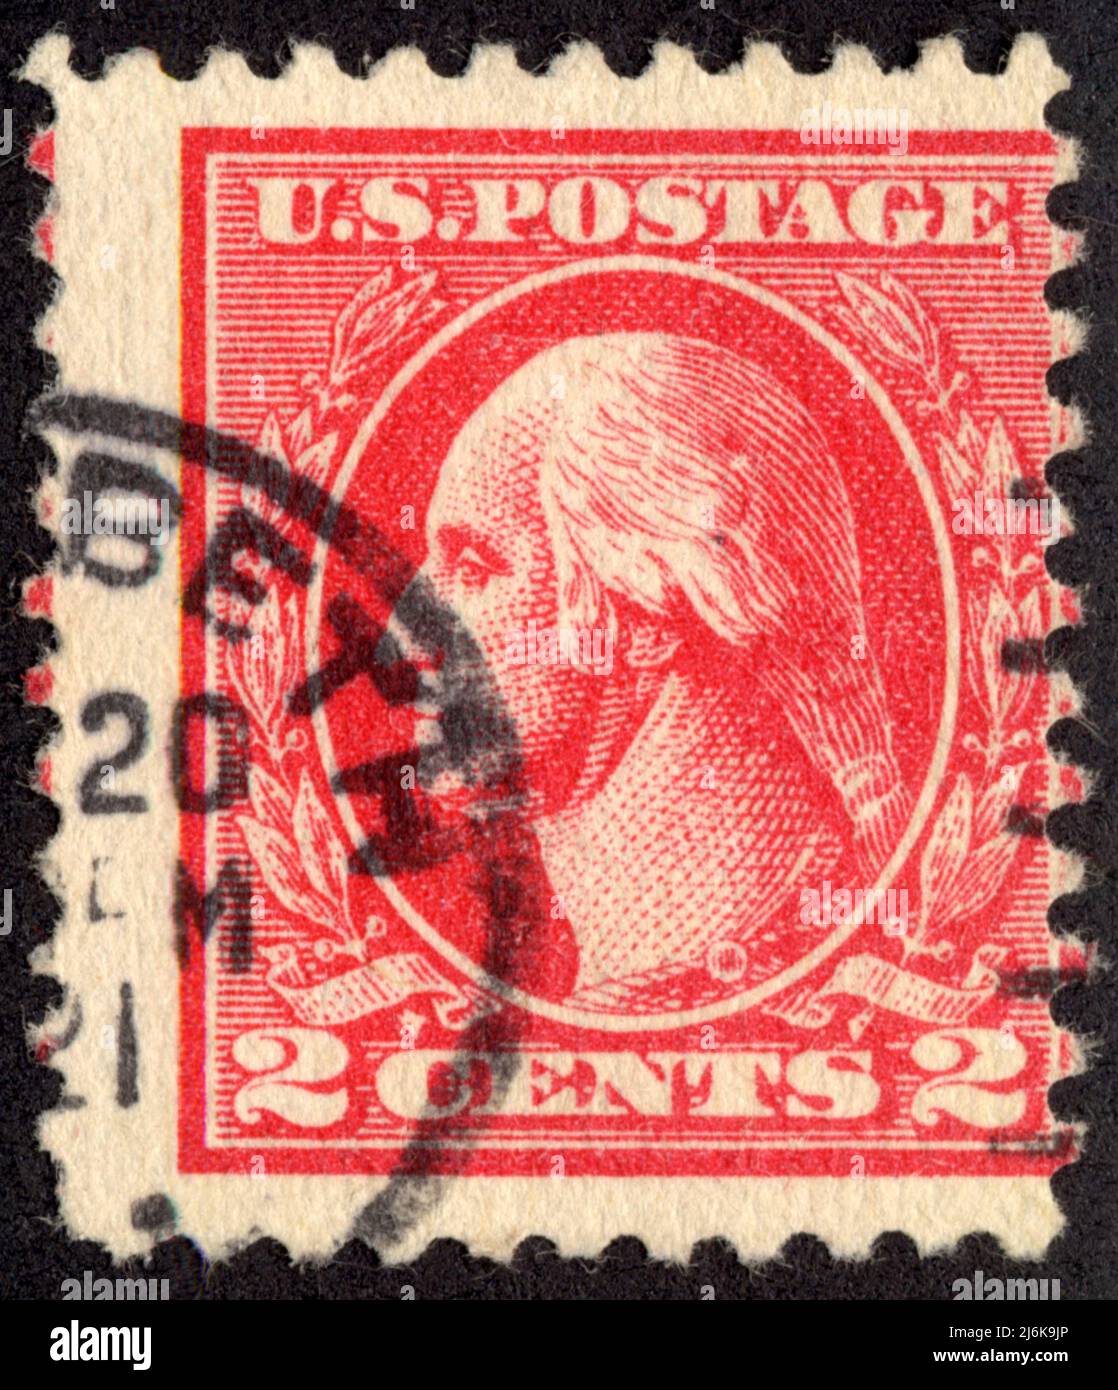 Timbre oblitéré U.S. Postage, 2 cents, Stock Photo